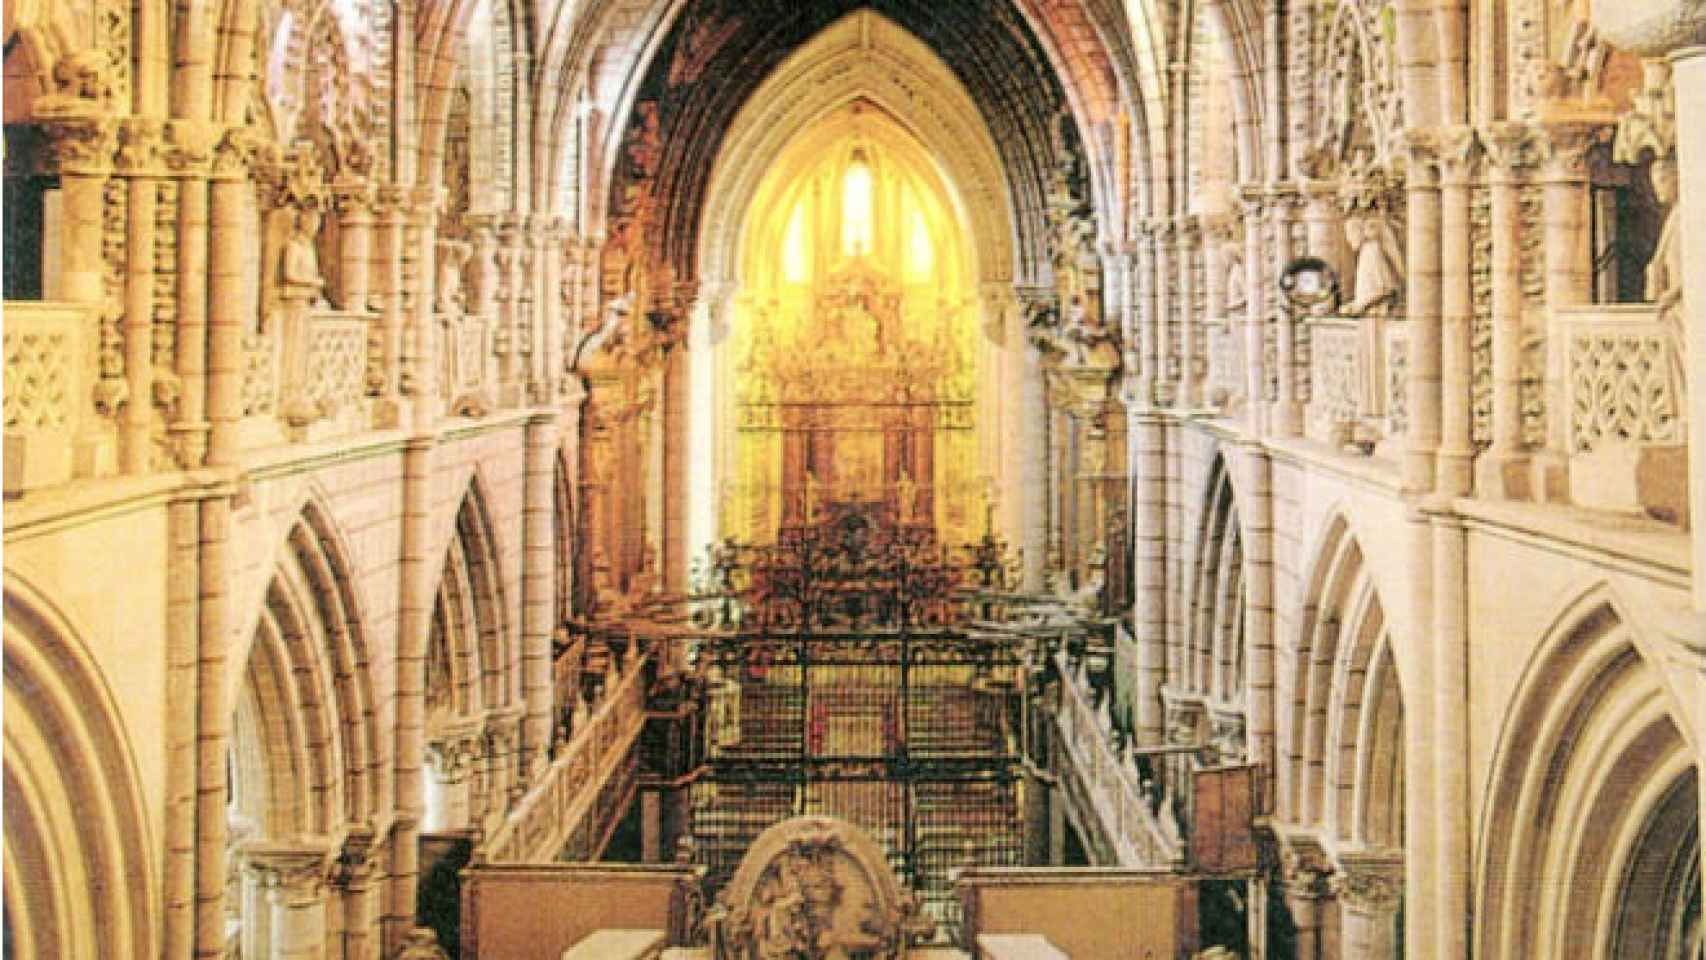 Catedral de Cuenca. Imagen de archivo